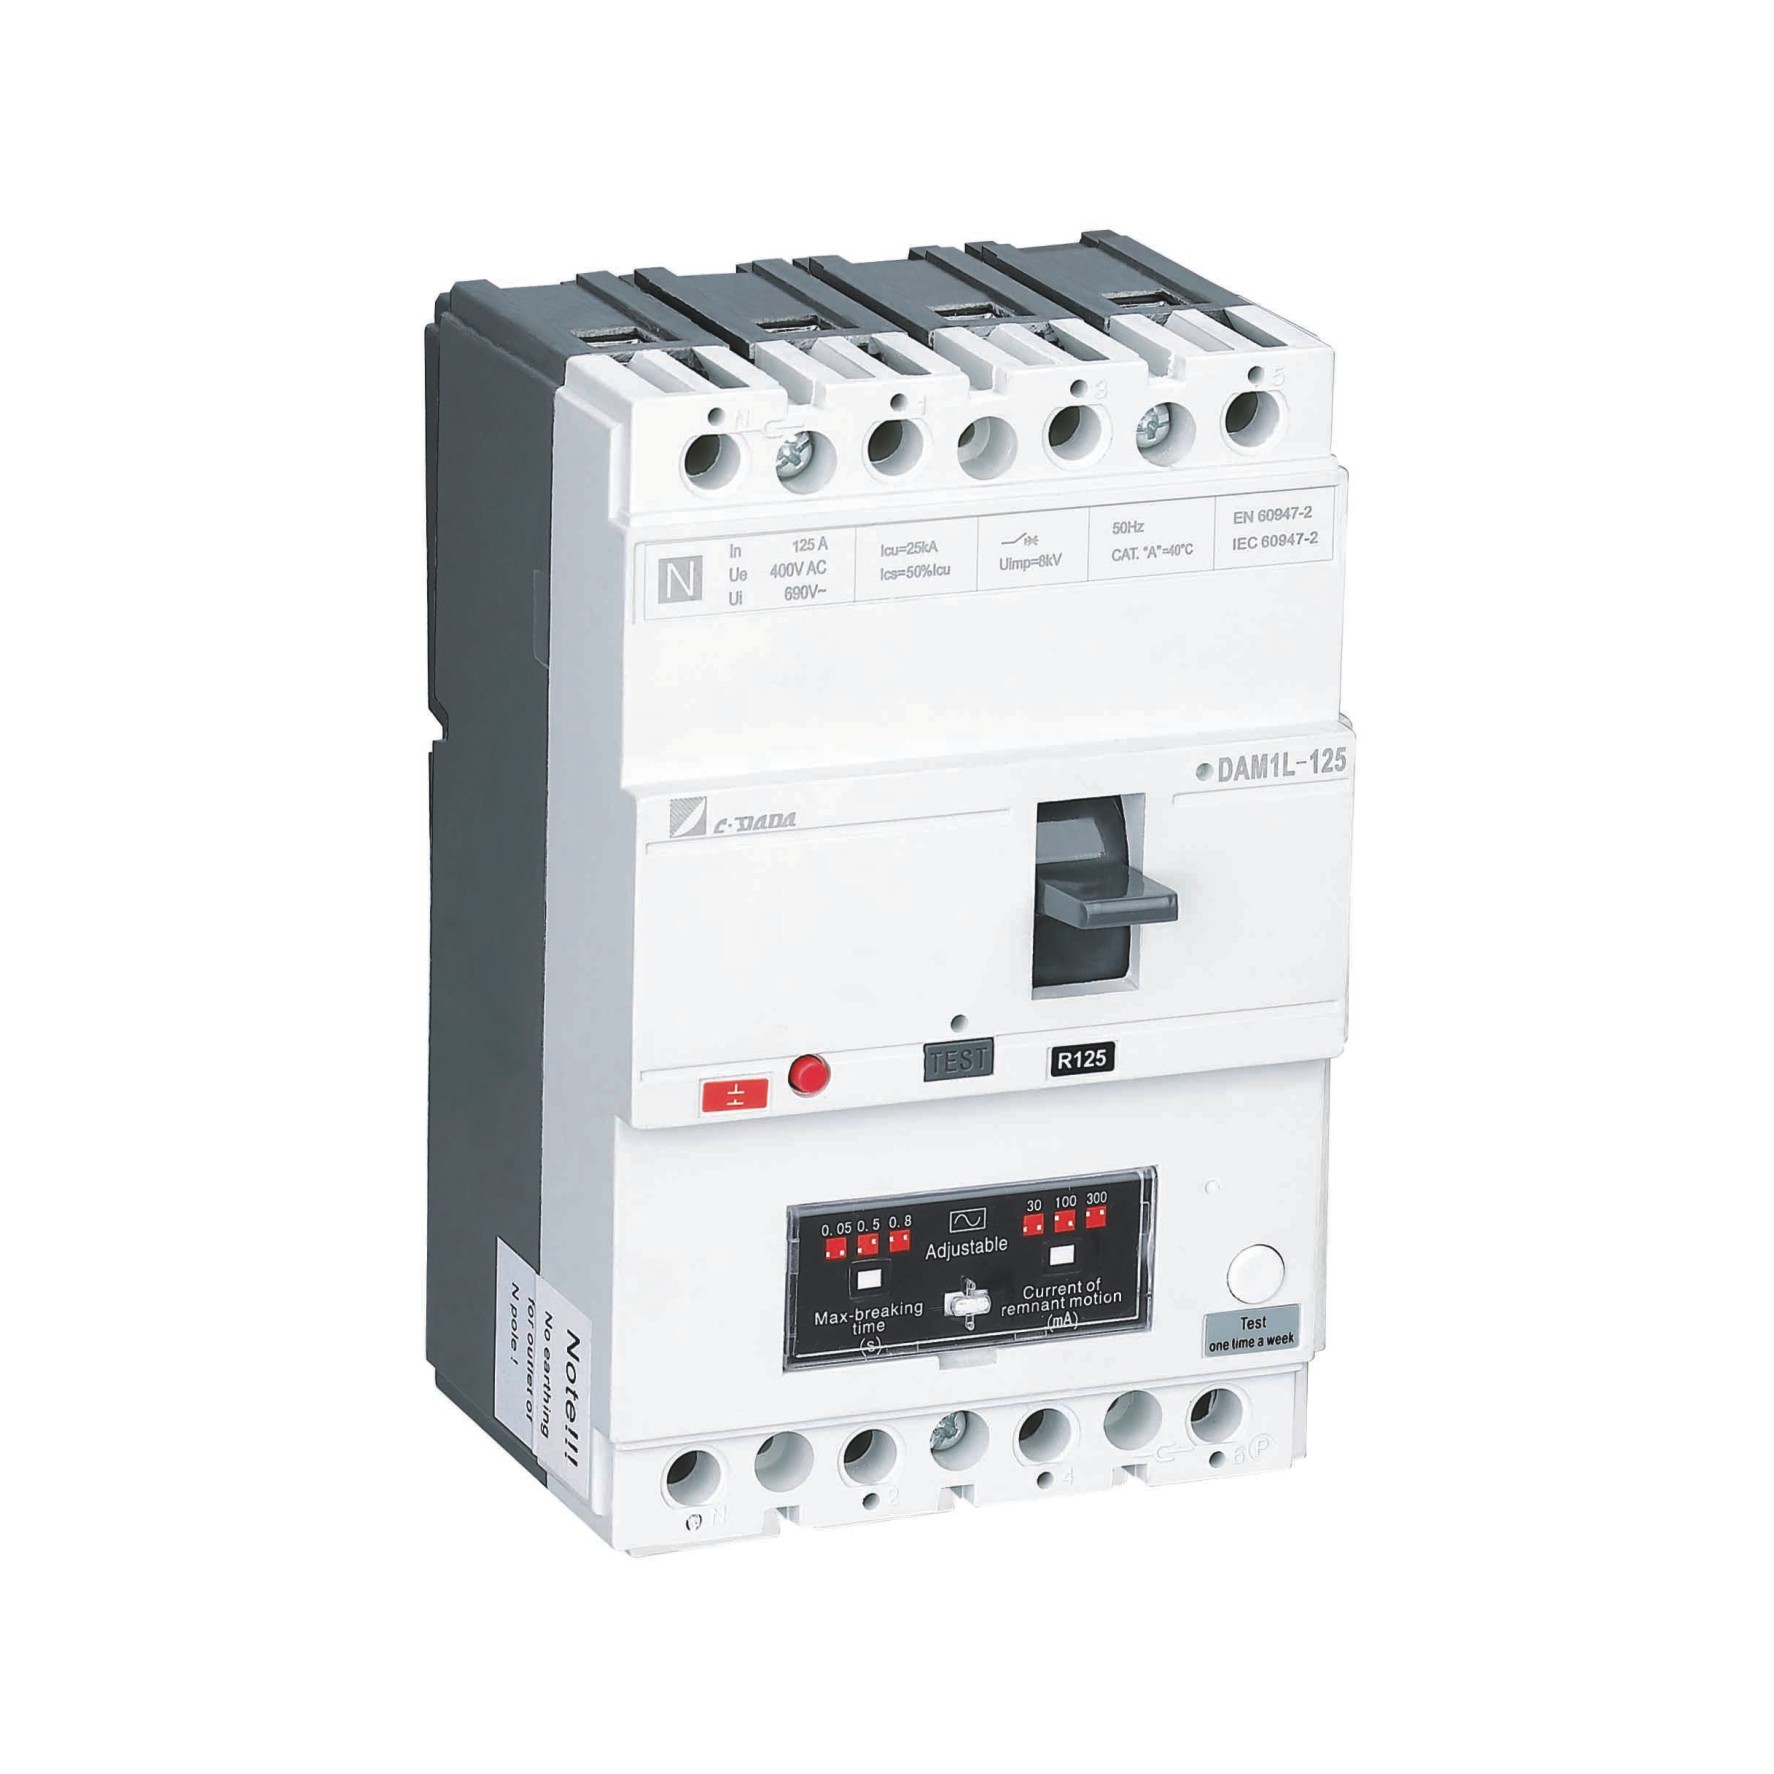 https://www.dada-ele.com/dam1l-125-cbr-elcb-earth-leakage-protection-circuit-breaker-product/